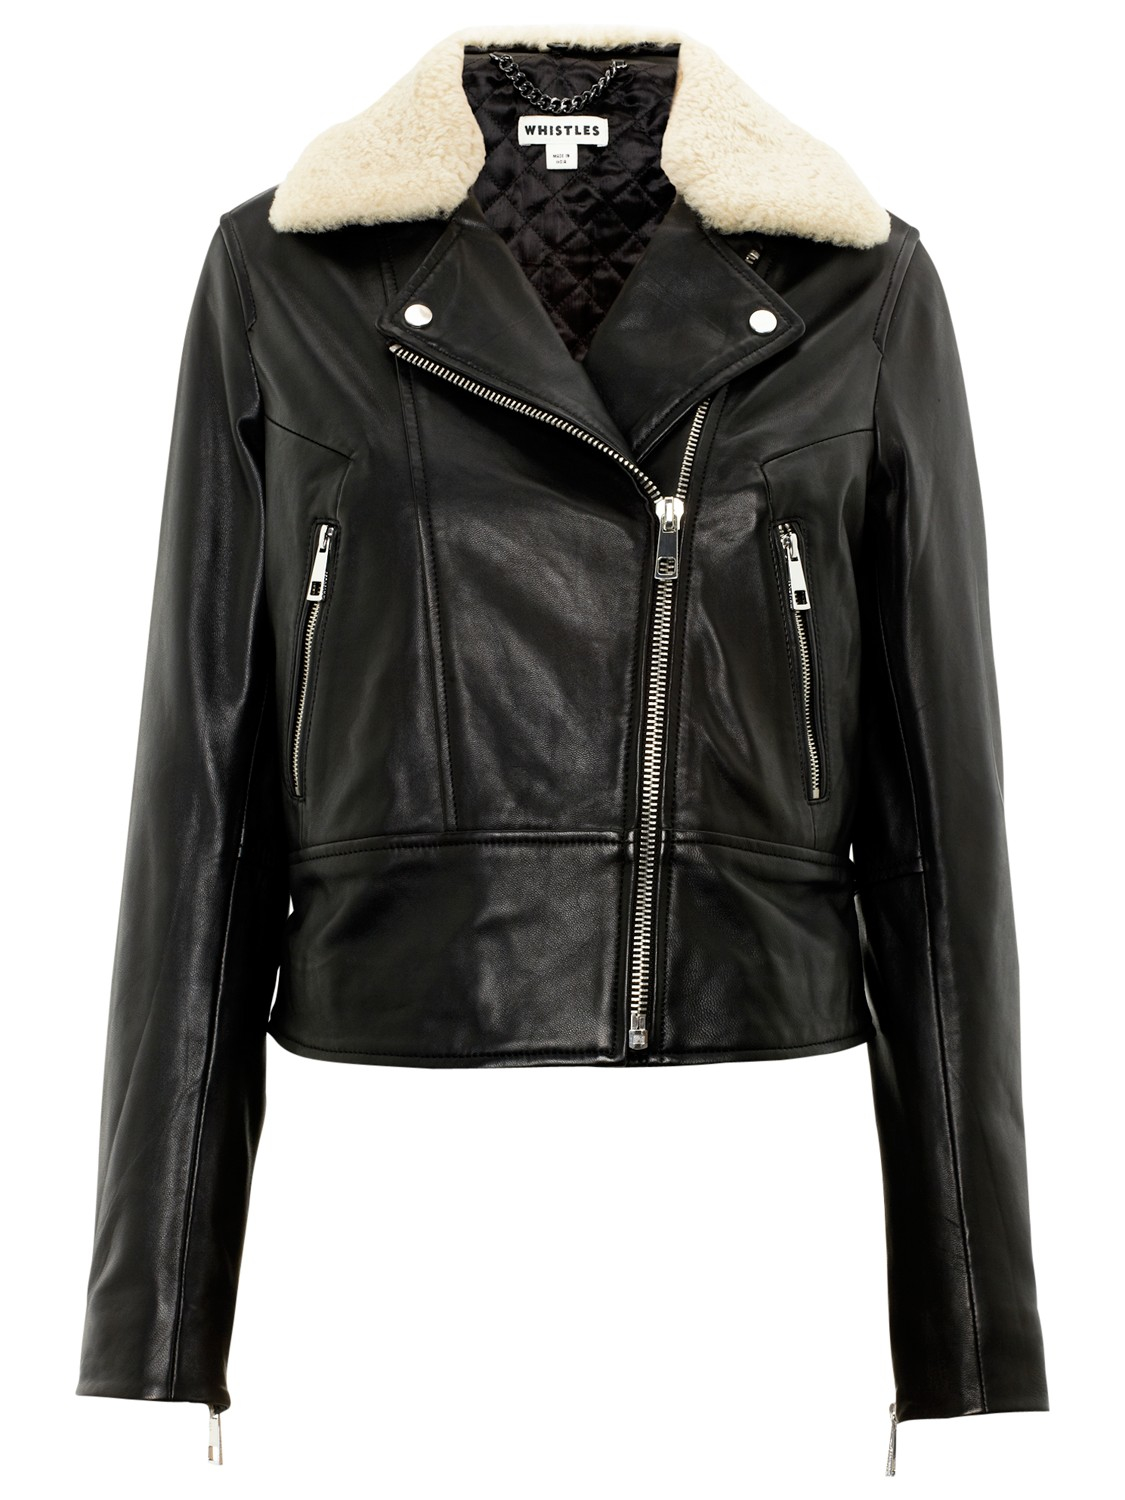 Whistles Fur Collar Leather Biker Jacket in Black - Lyst